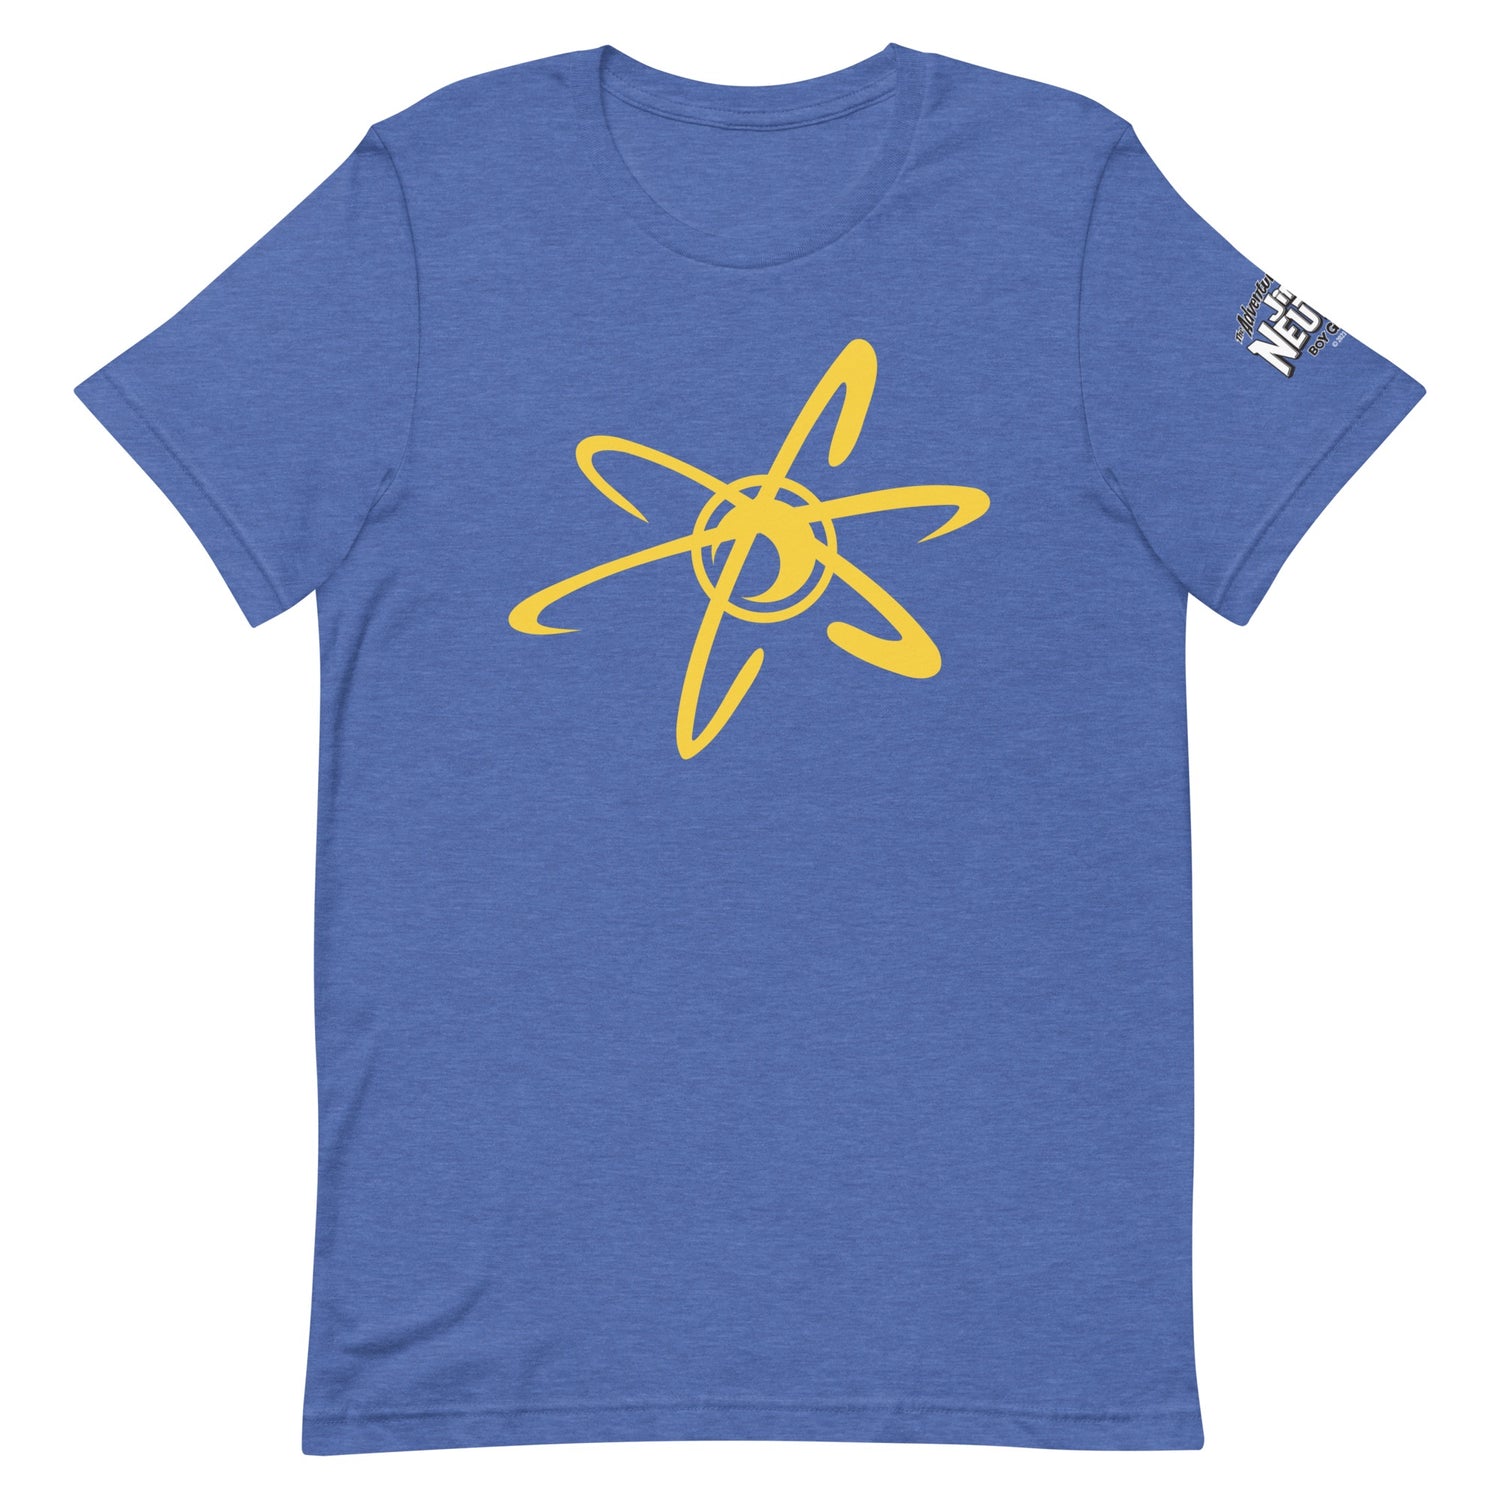 The Adventures Shop of Sleeve T-Shirt Adult Boy Neutron, Genius Jimmy – Short Atom Paramount